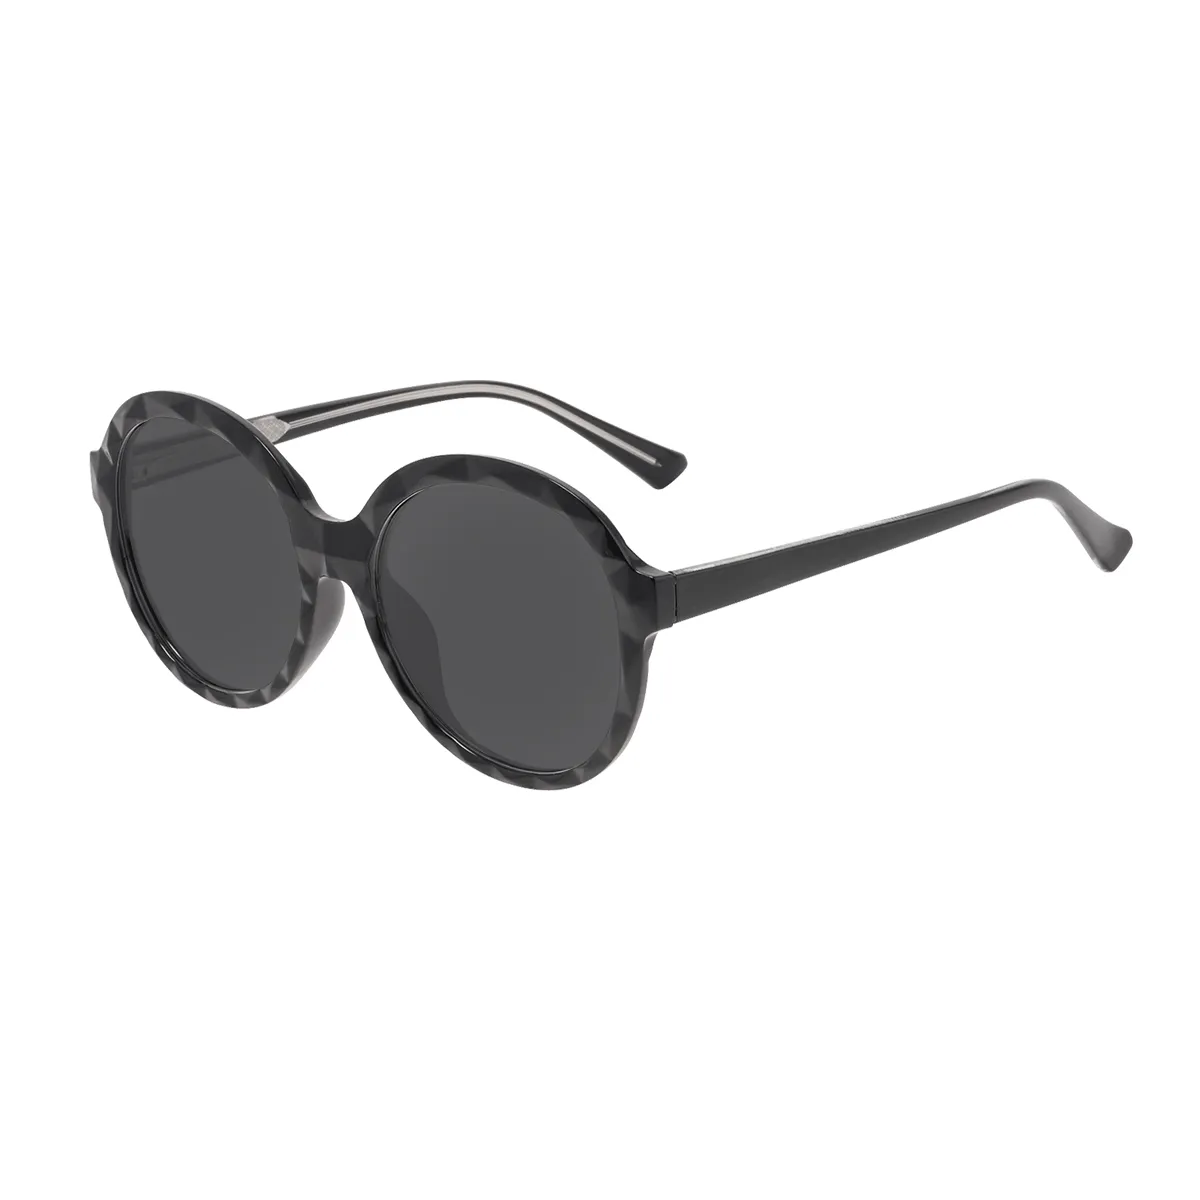 Minna - Round Black Sunglasses for Women